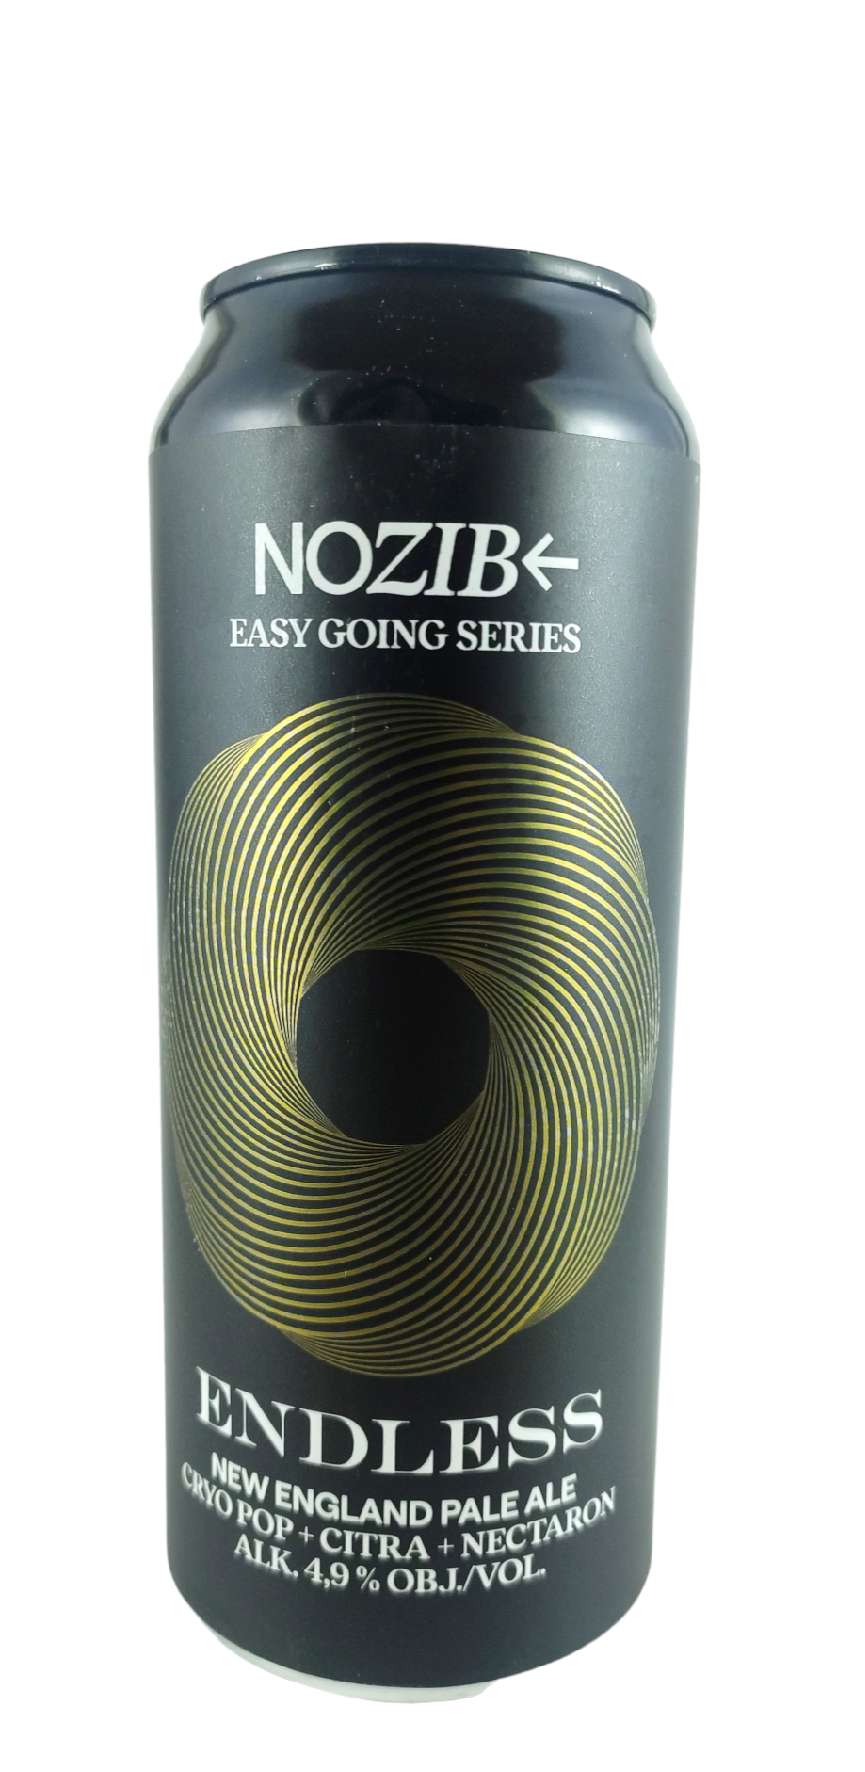 Nozib Endless NEPA Cryo Pop + Citra + Nectaron 12°